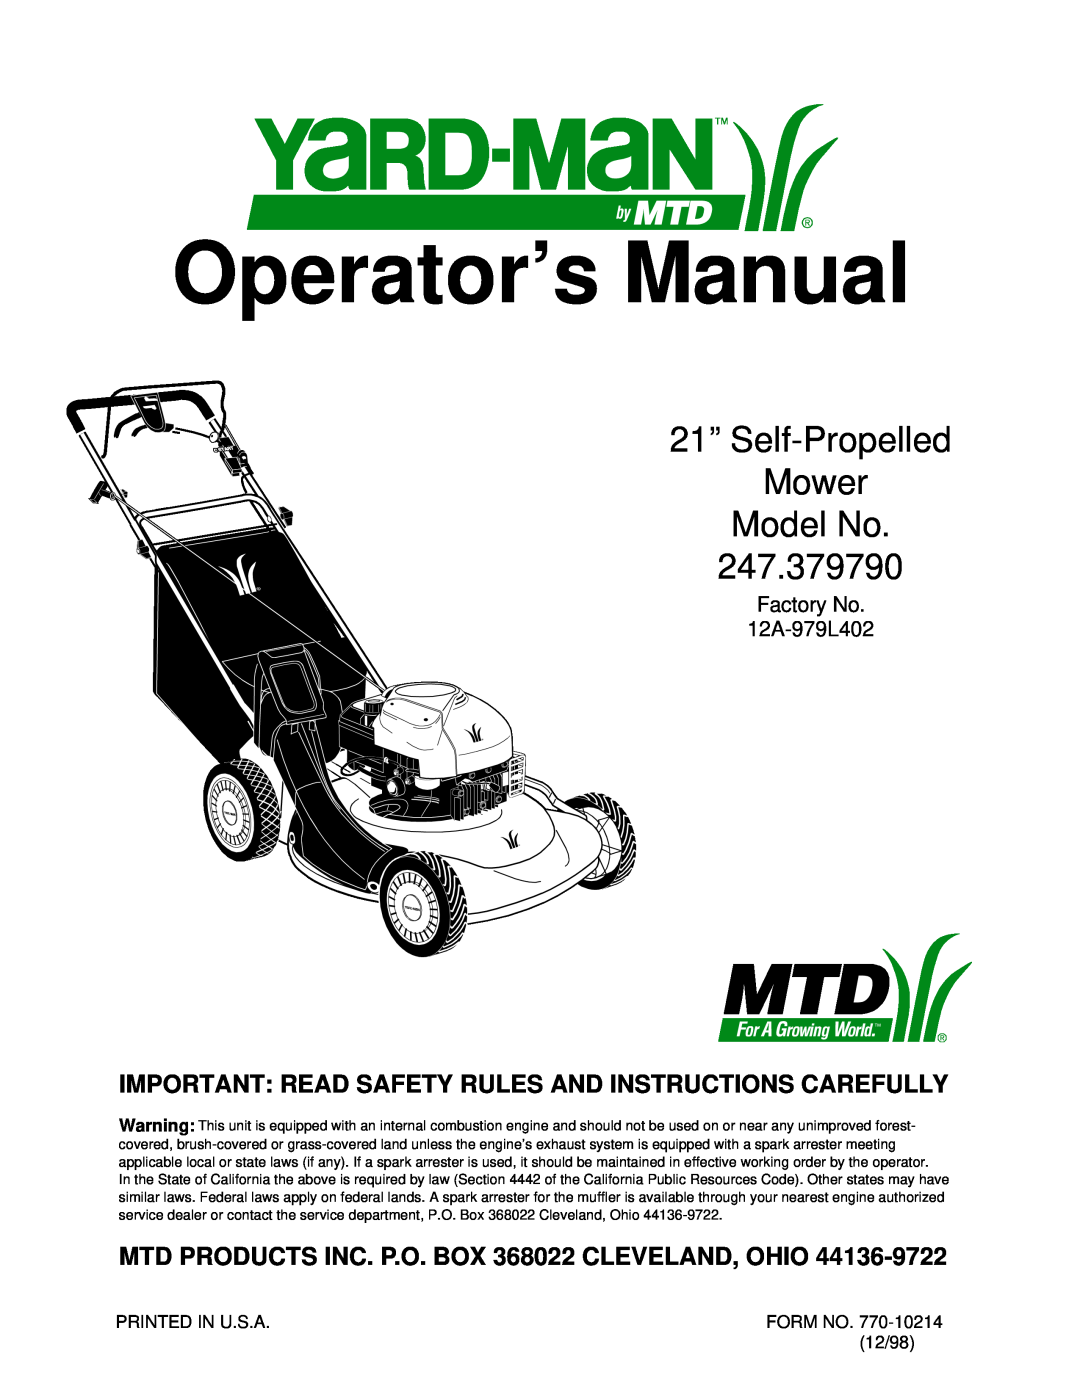 Yard-Man 247.37979 manual MTD PRODUCTS INC. P.O. BOX 368022 CLEVELAND, OHIO, Factory No. 12A-979L402, Operator’s Manual 